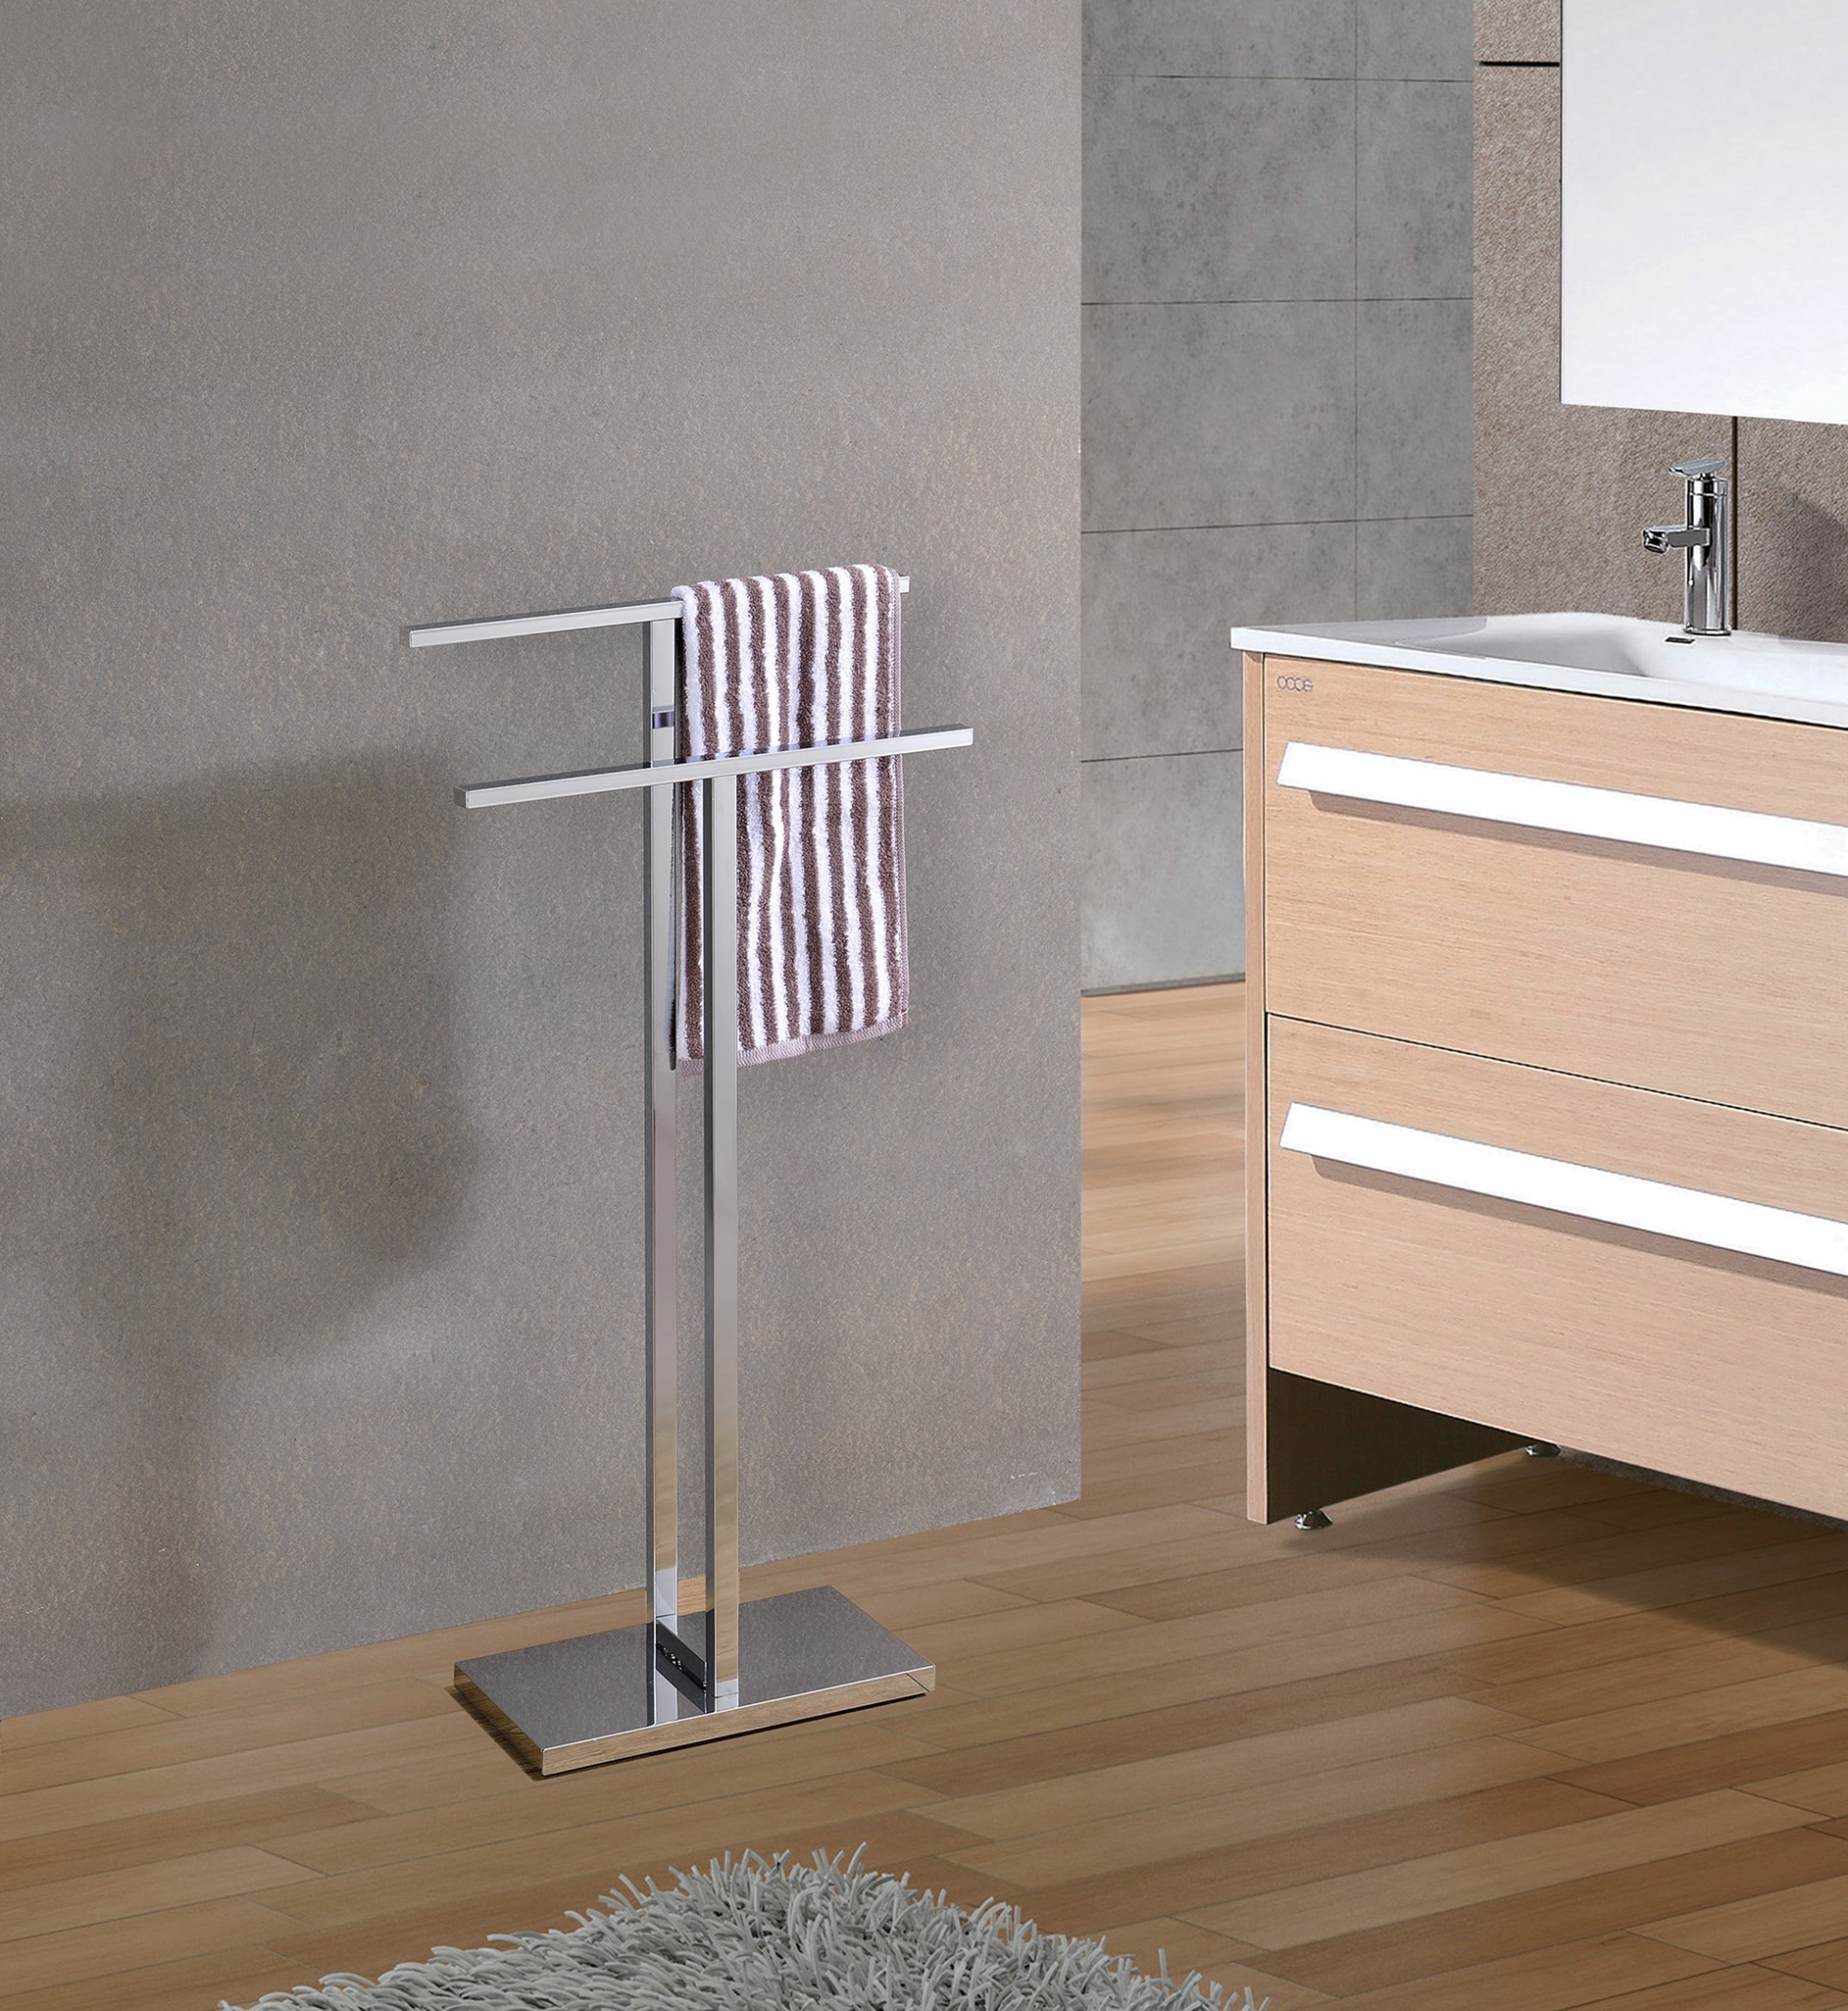 Pelton Freestanding Bathroom Towel Rack with Two Bars, Stainless Steel Stainless Steel Towel Rack Free Standing